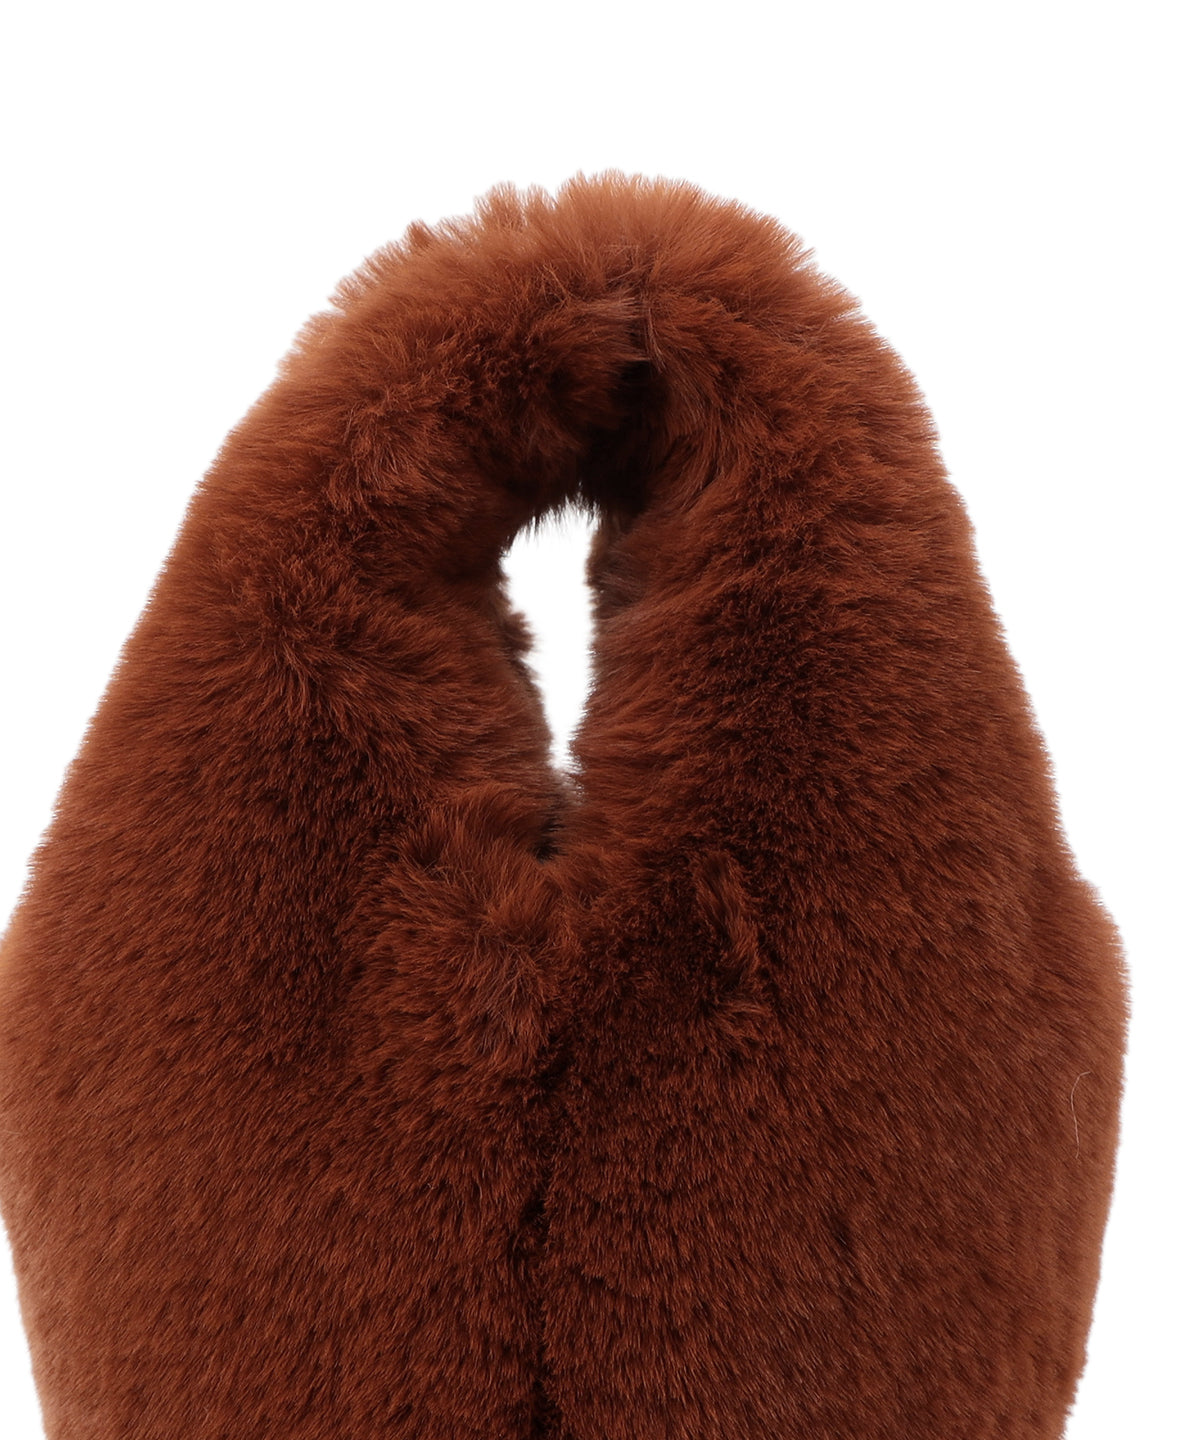 Eco Fur Convenience Bag (Small) BROWN×NAVY